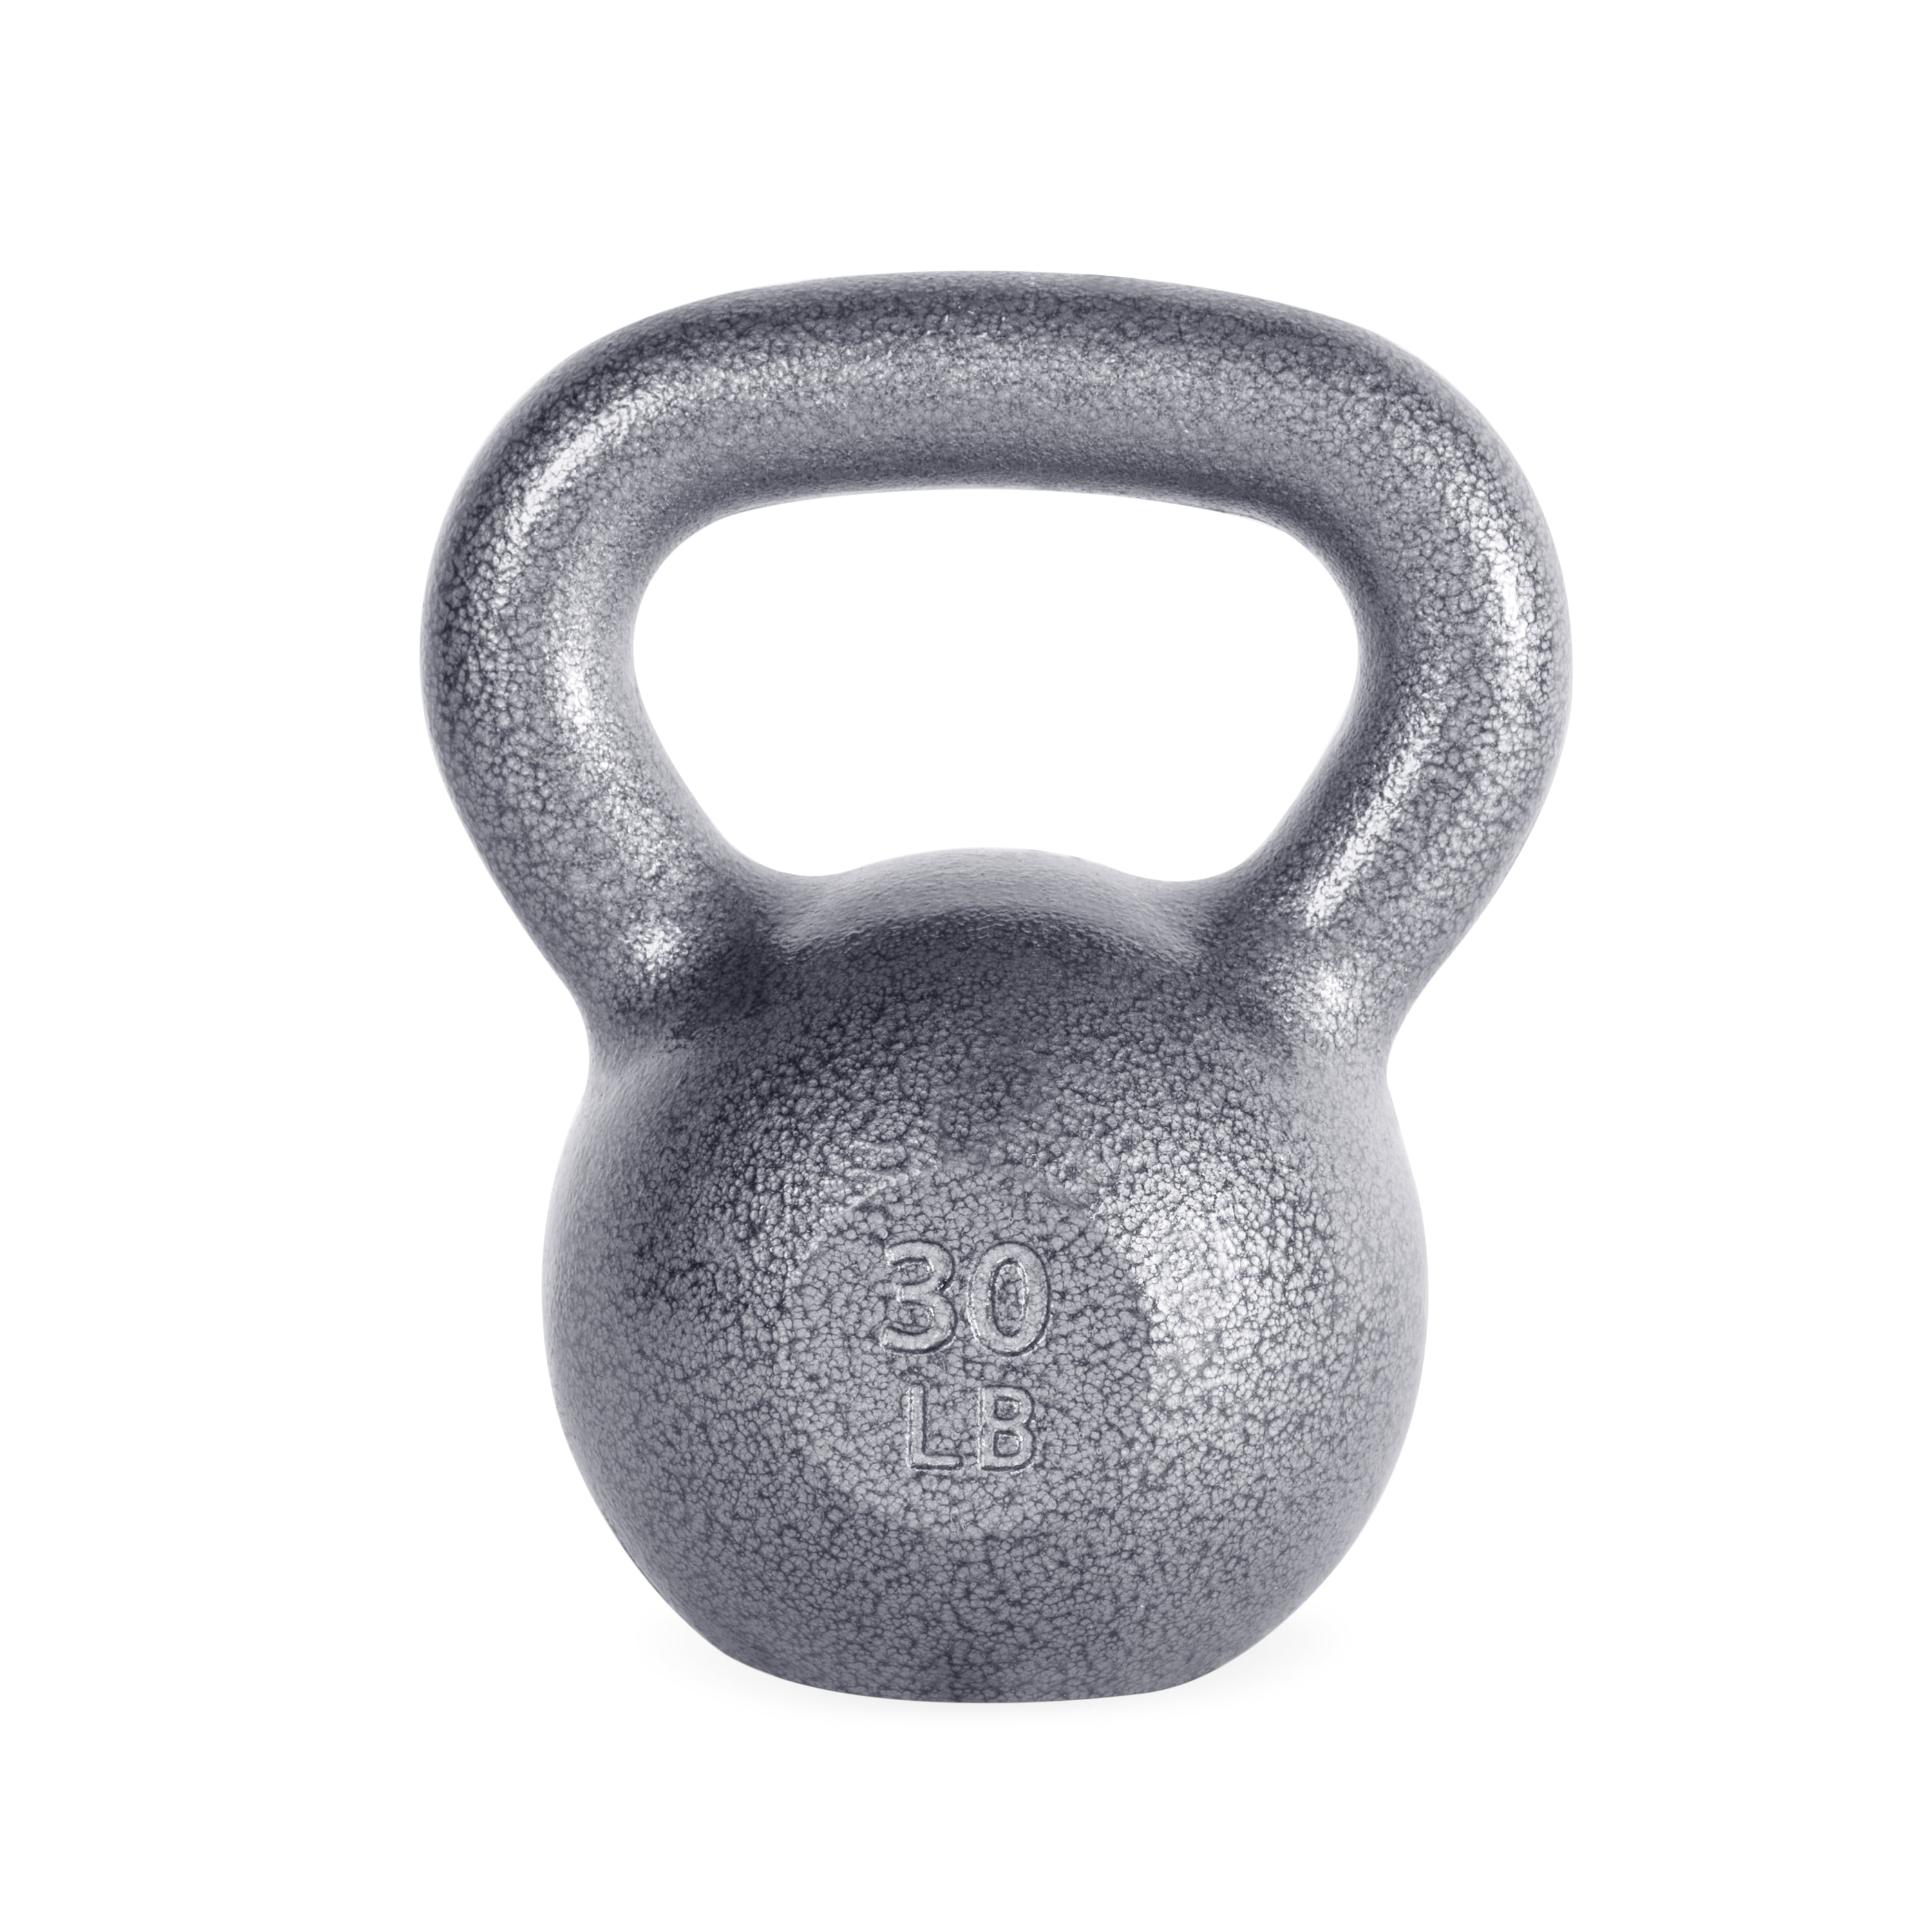 Crossfit px90 Home Gym Dumb Bells Weights WEIDER Kettlebell 15 lb 